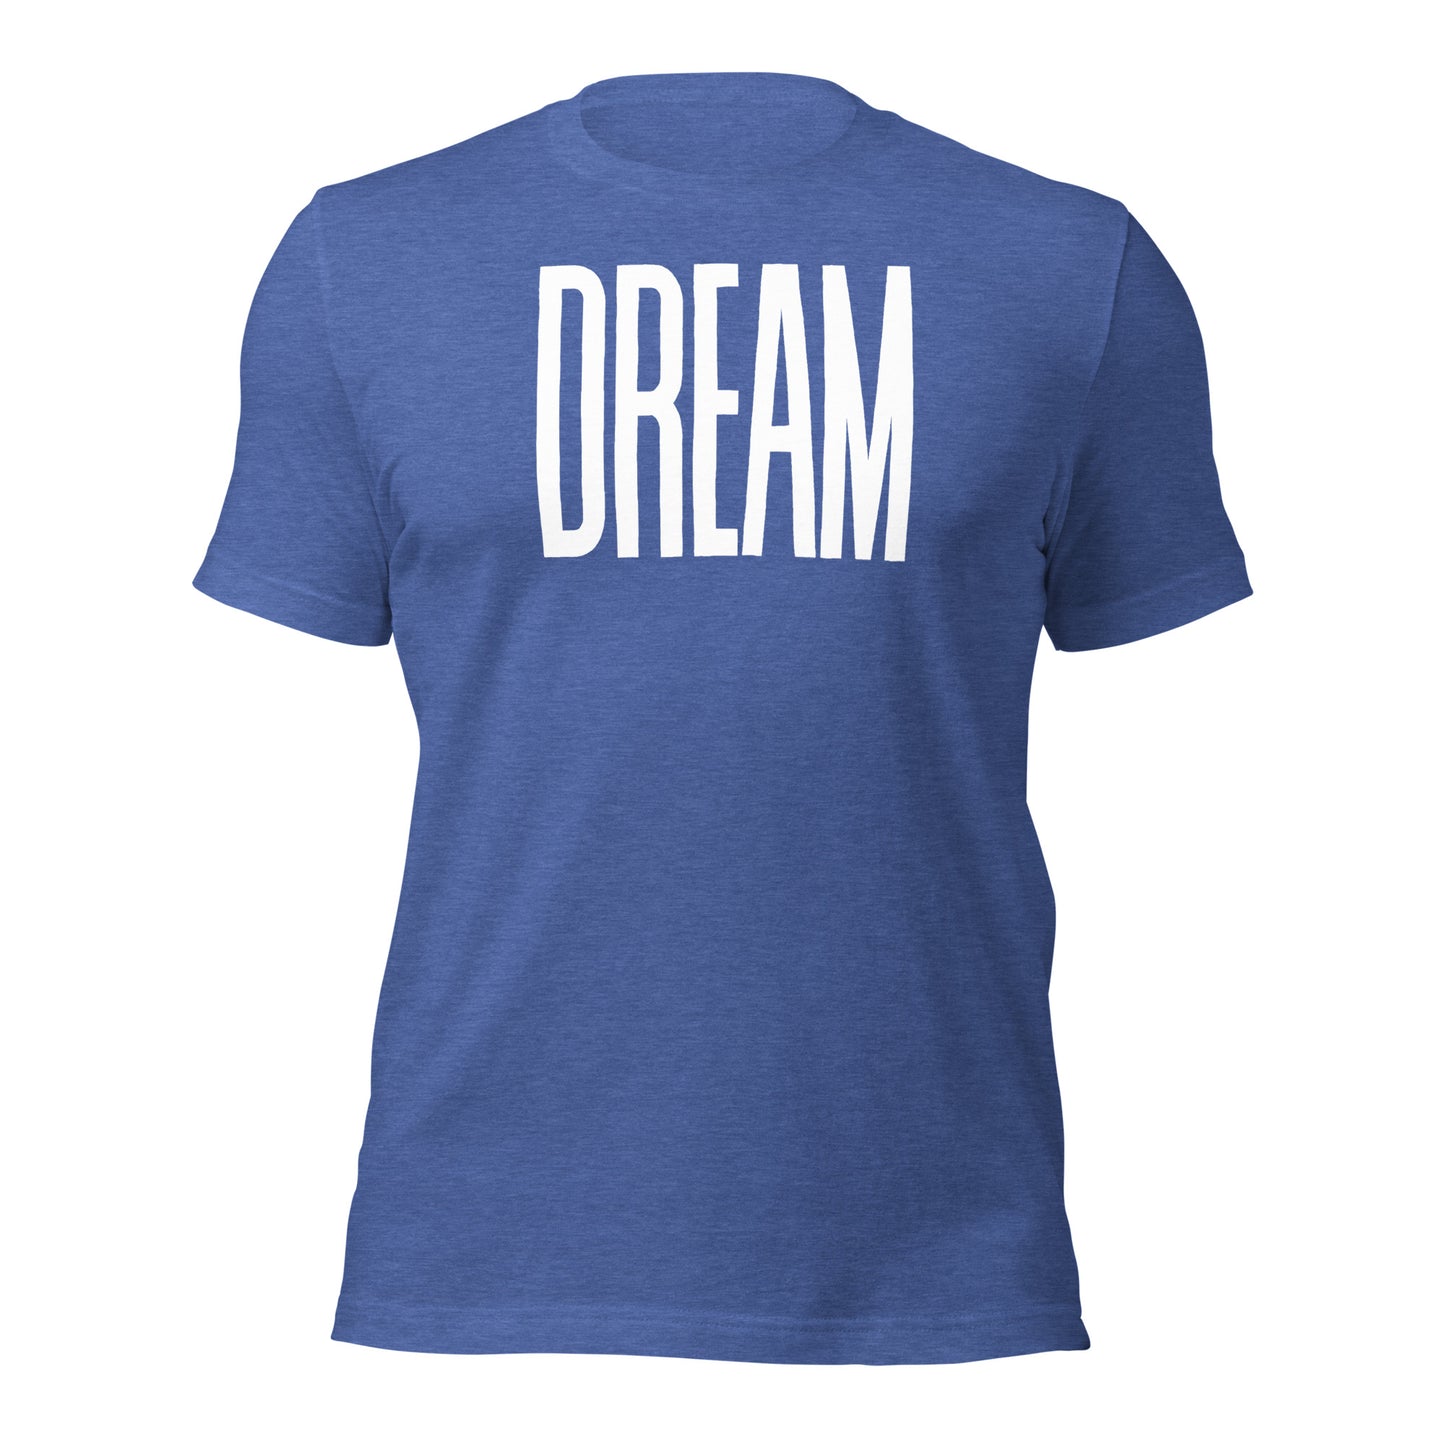 Dream Big Visionary Entrepreneur T-Shirt